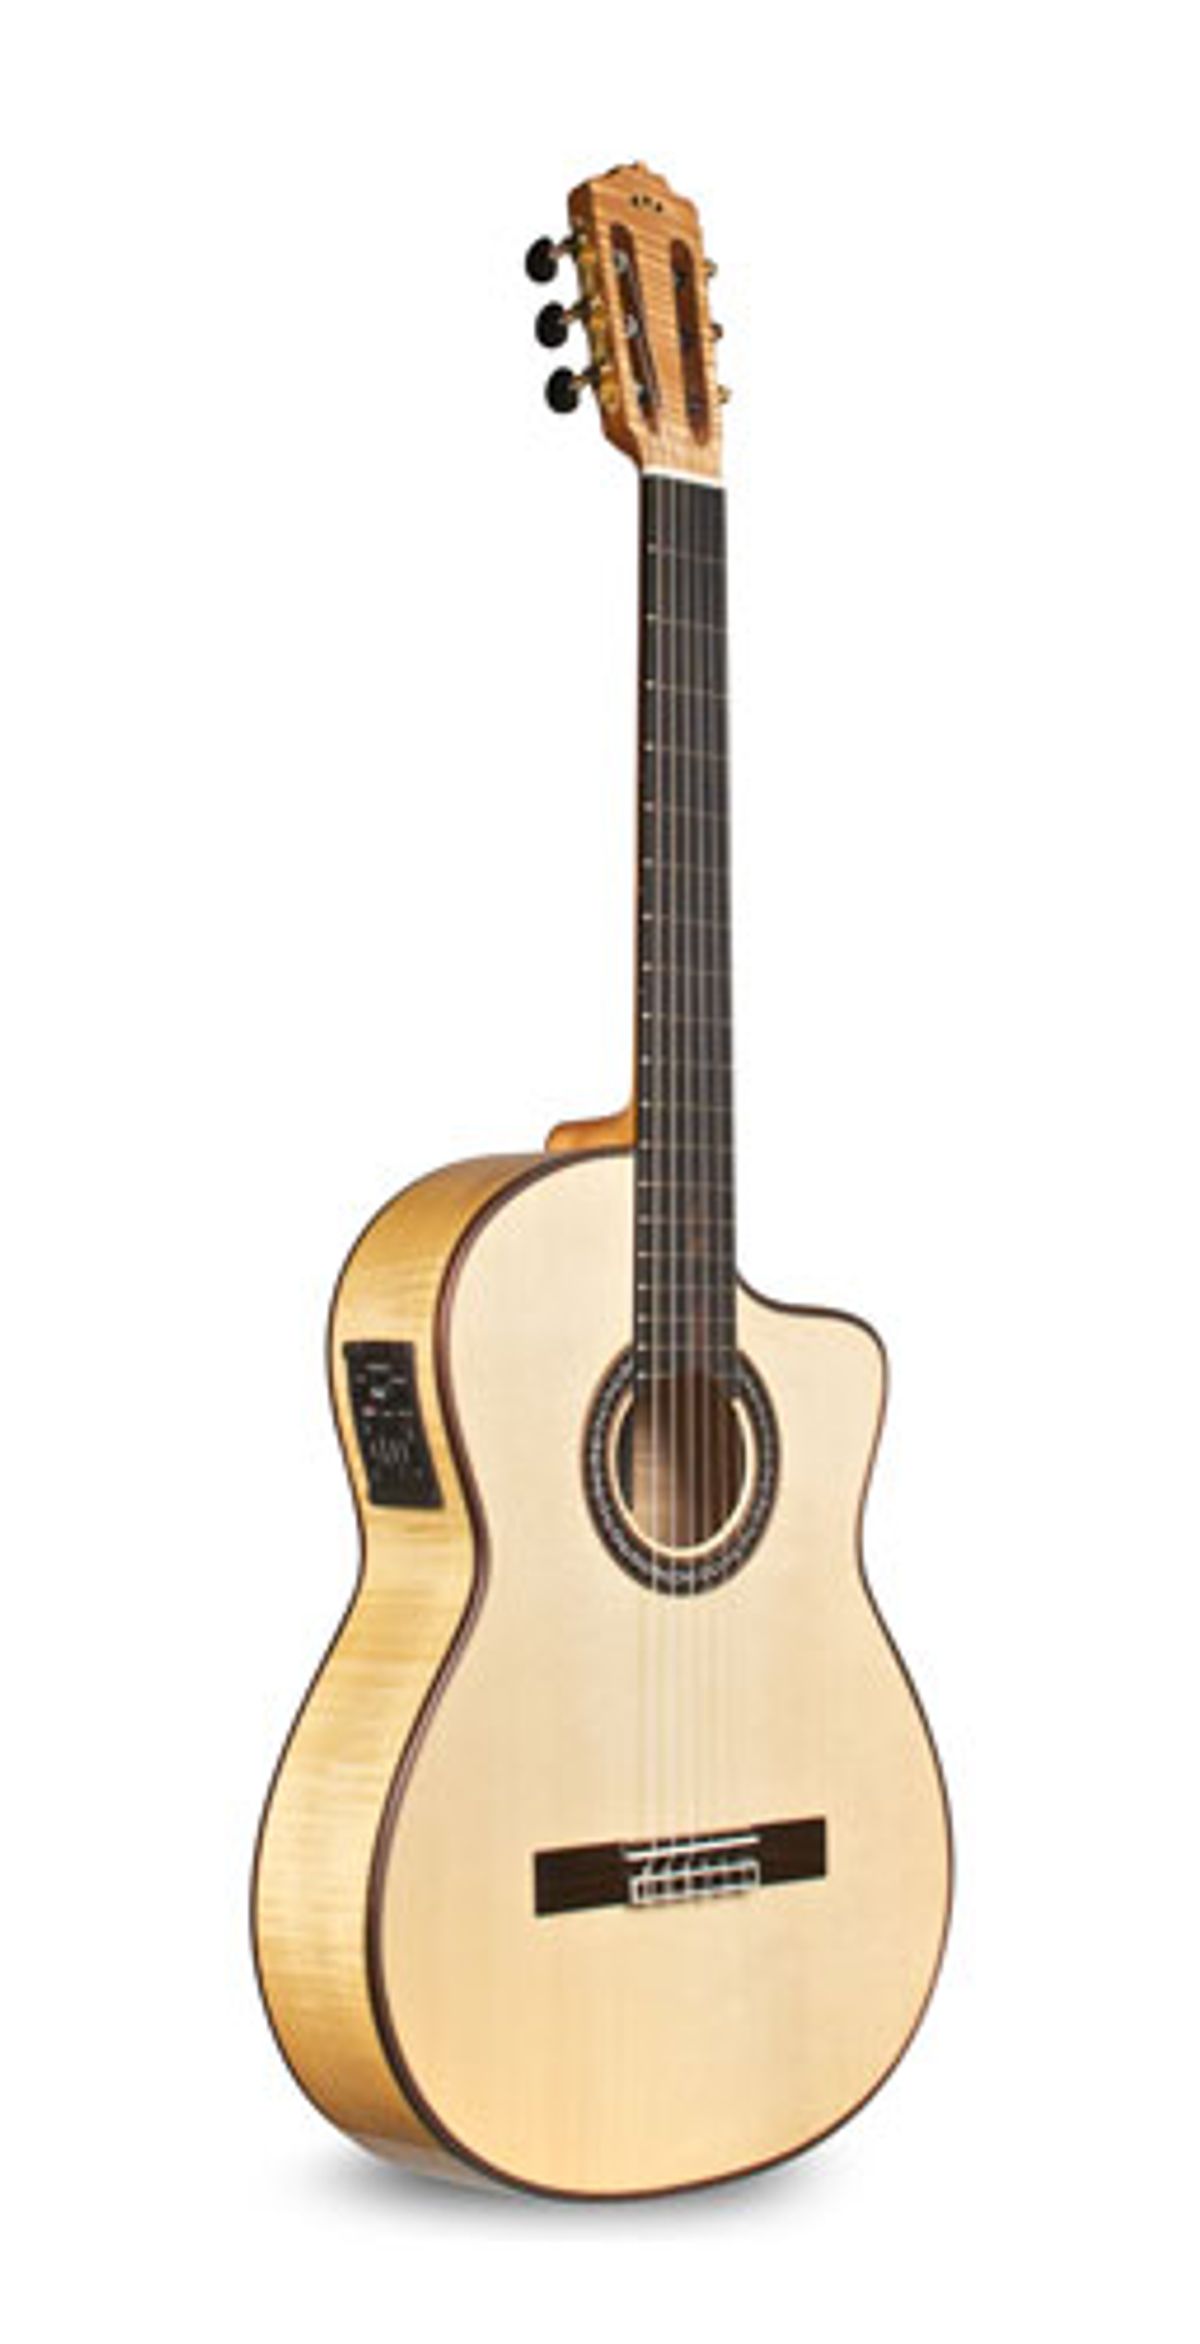 Cordoba Guitars Introduces the GK Pro Maple